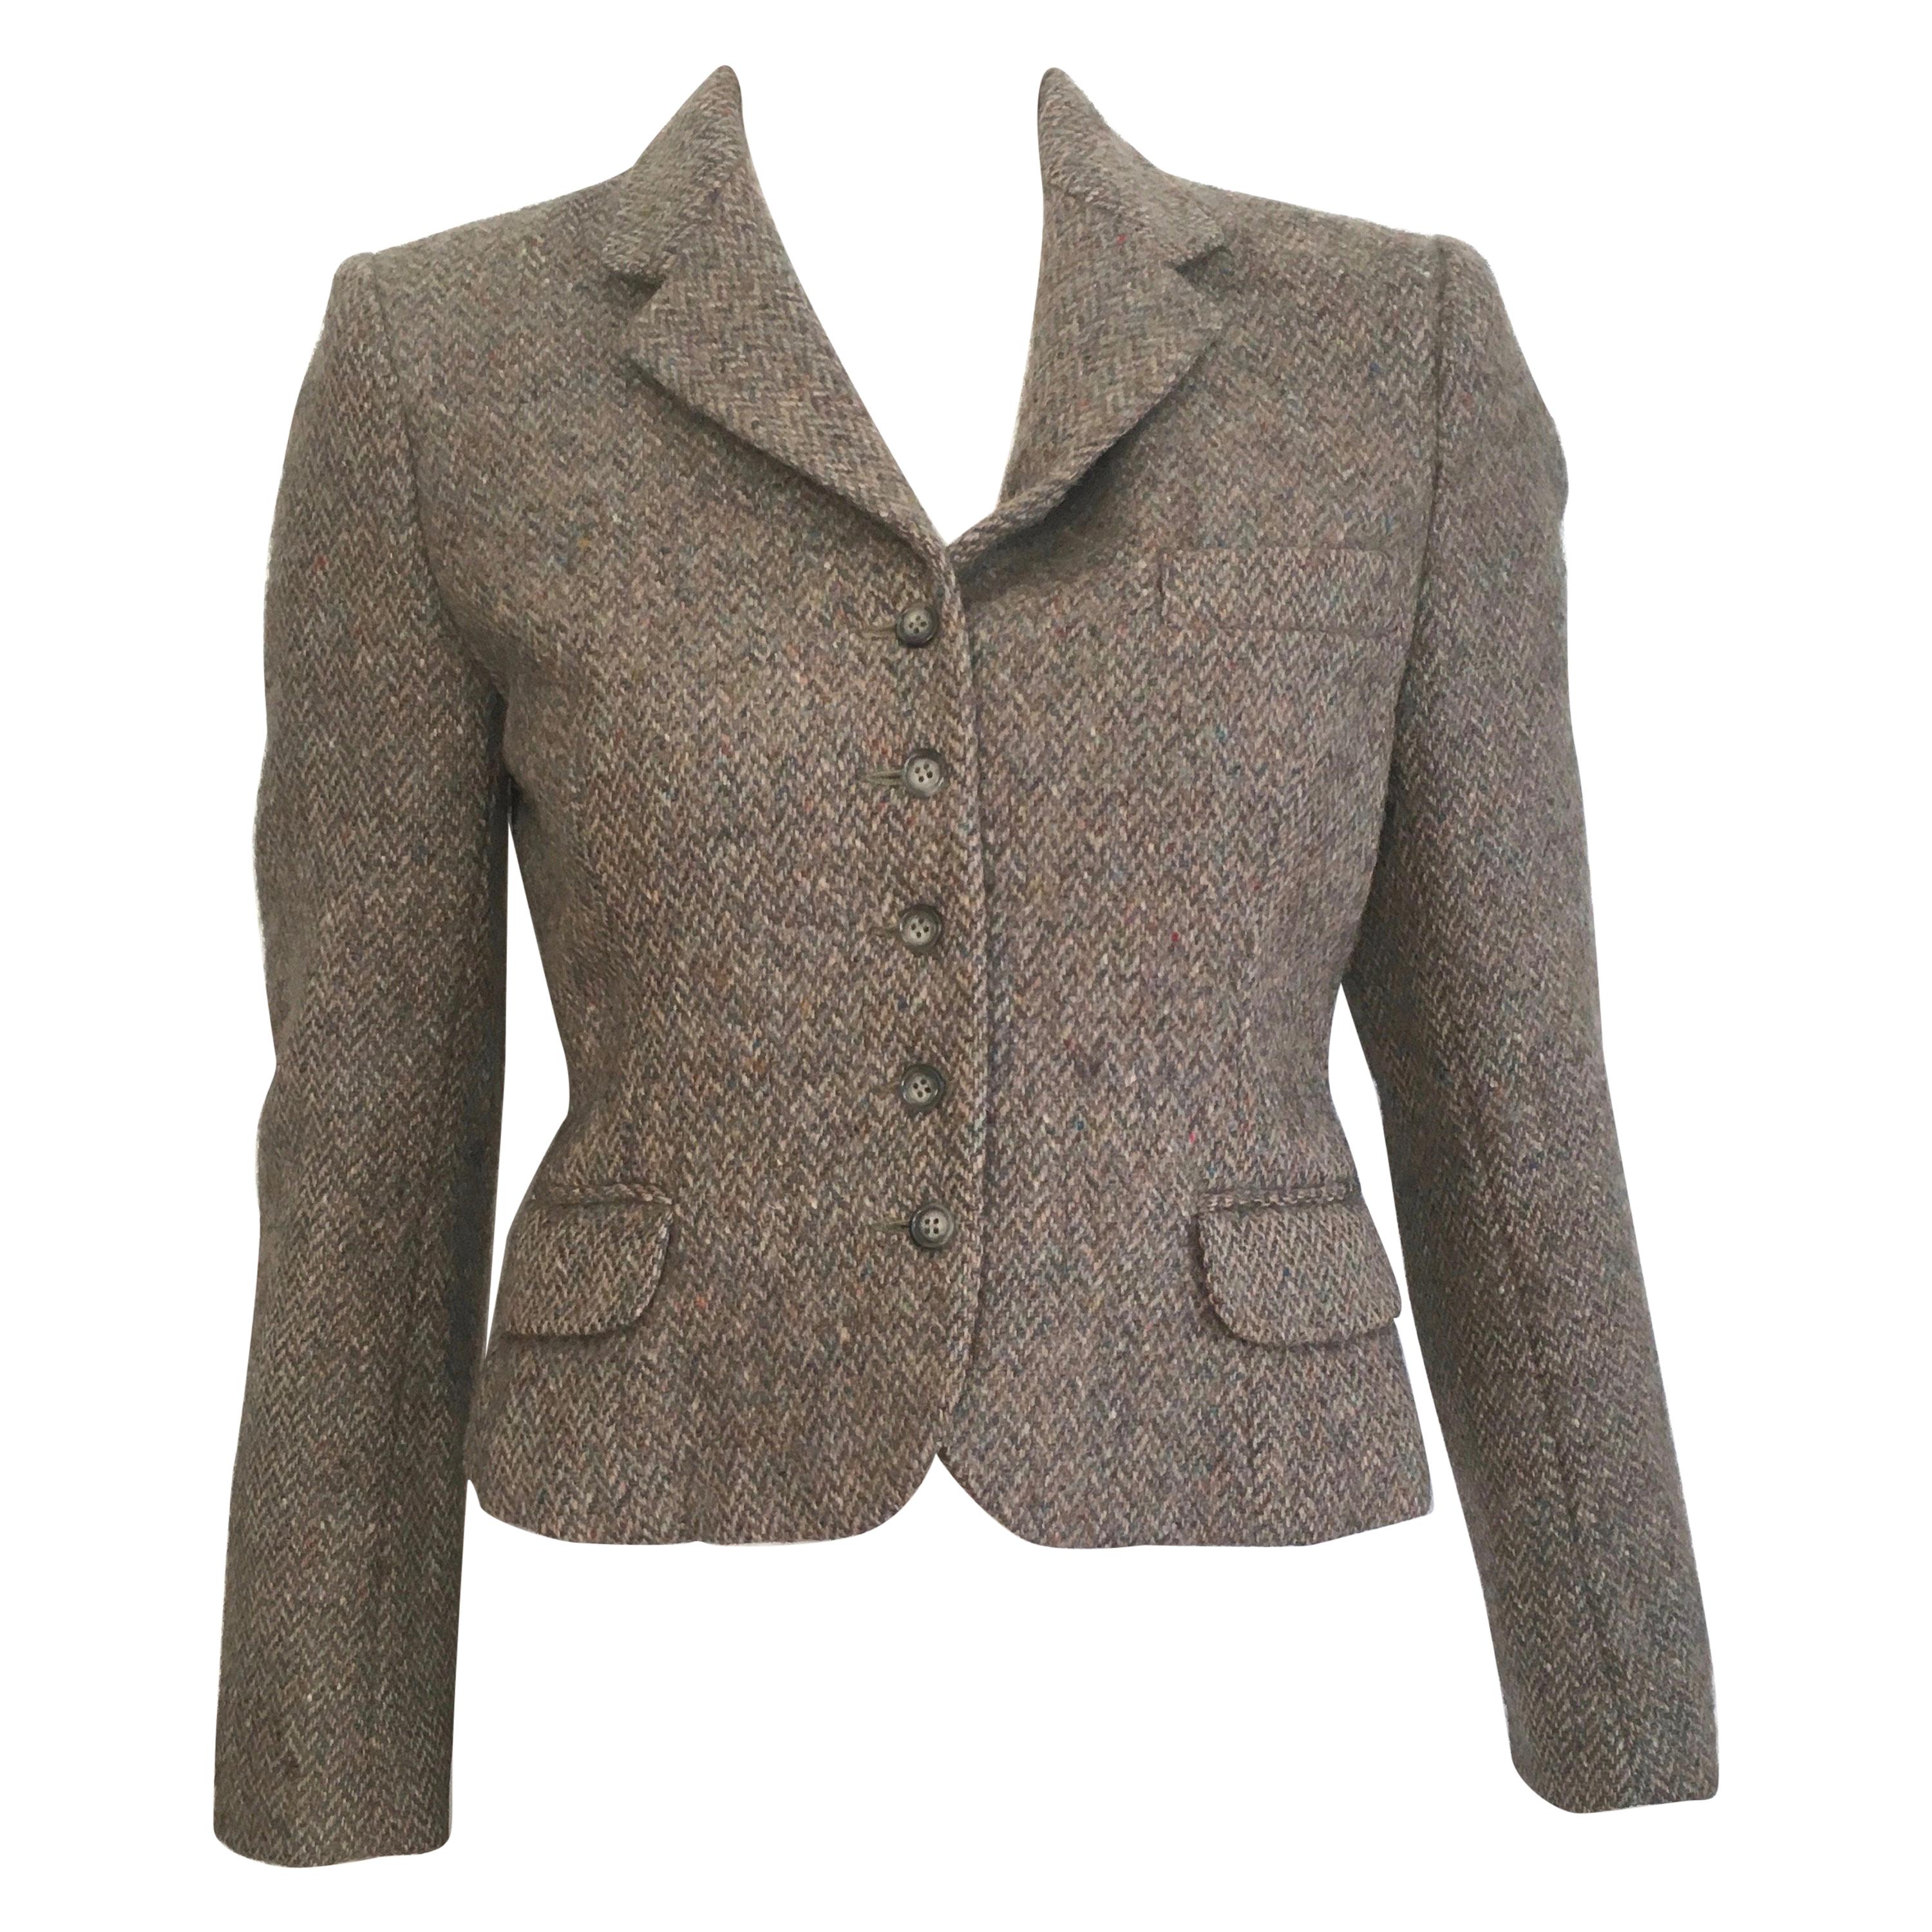 Pierre Cardin for Bloomingdale's 1960s Wool Cropped Jacket Size 4.